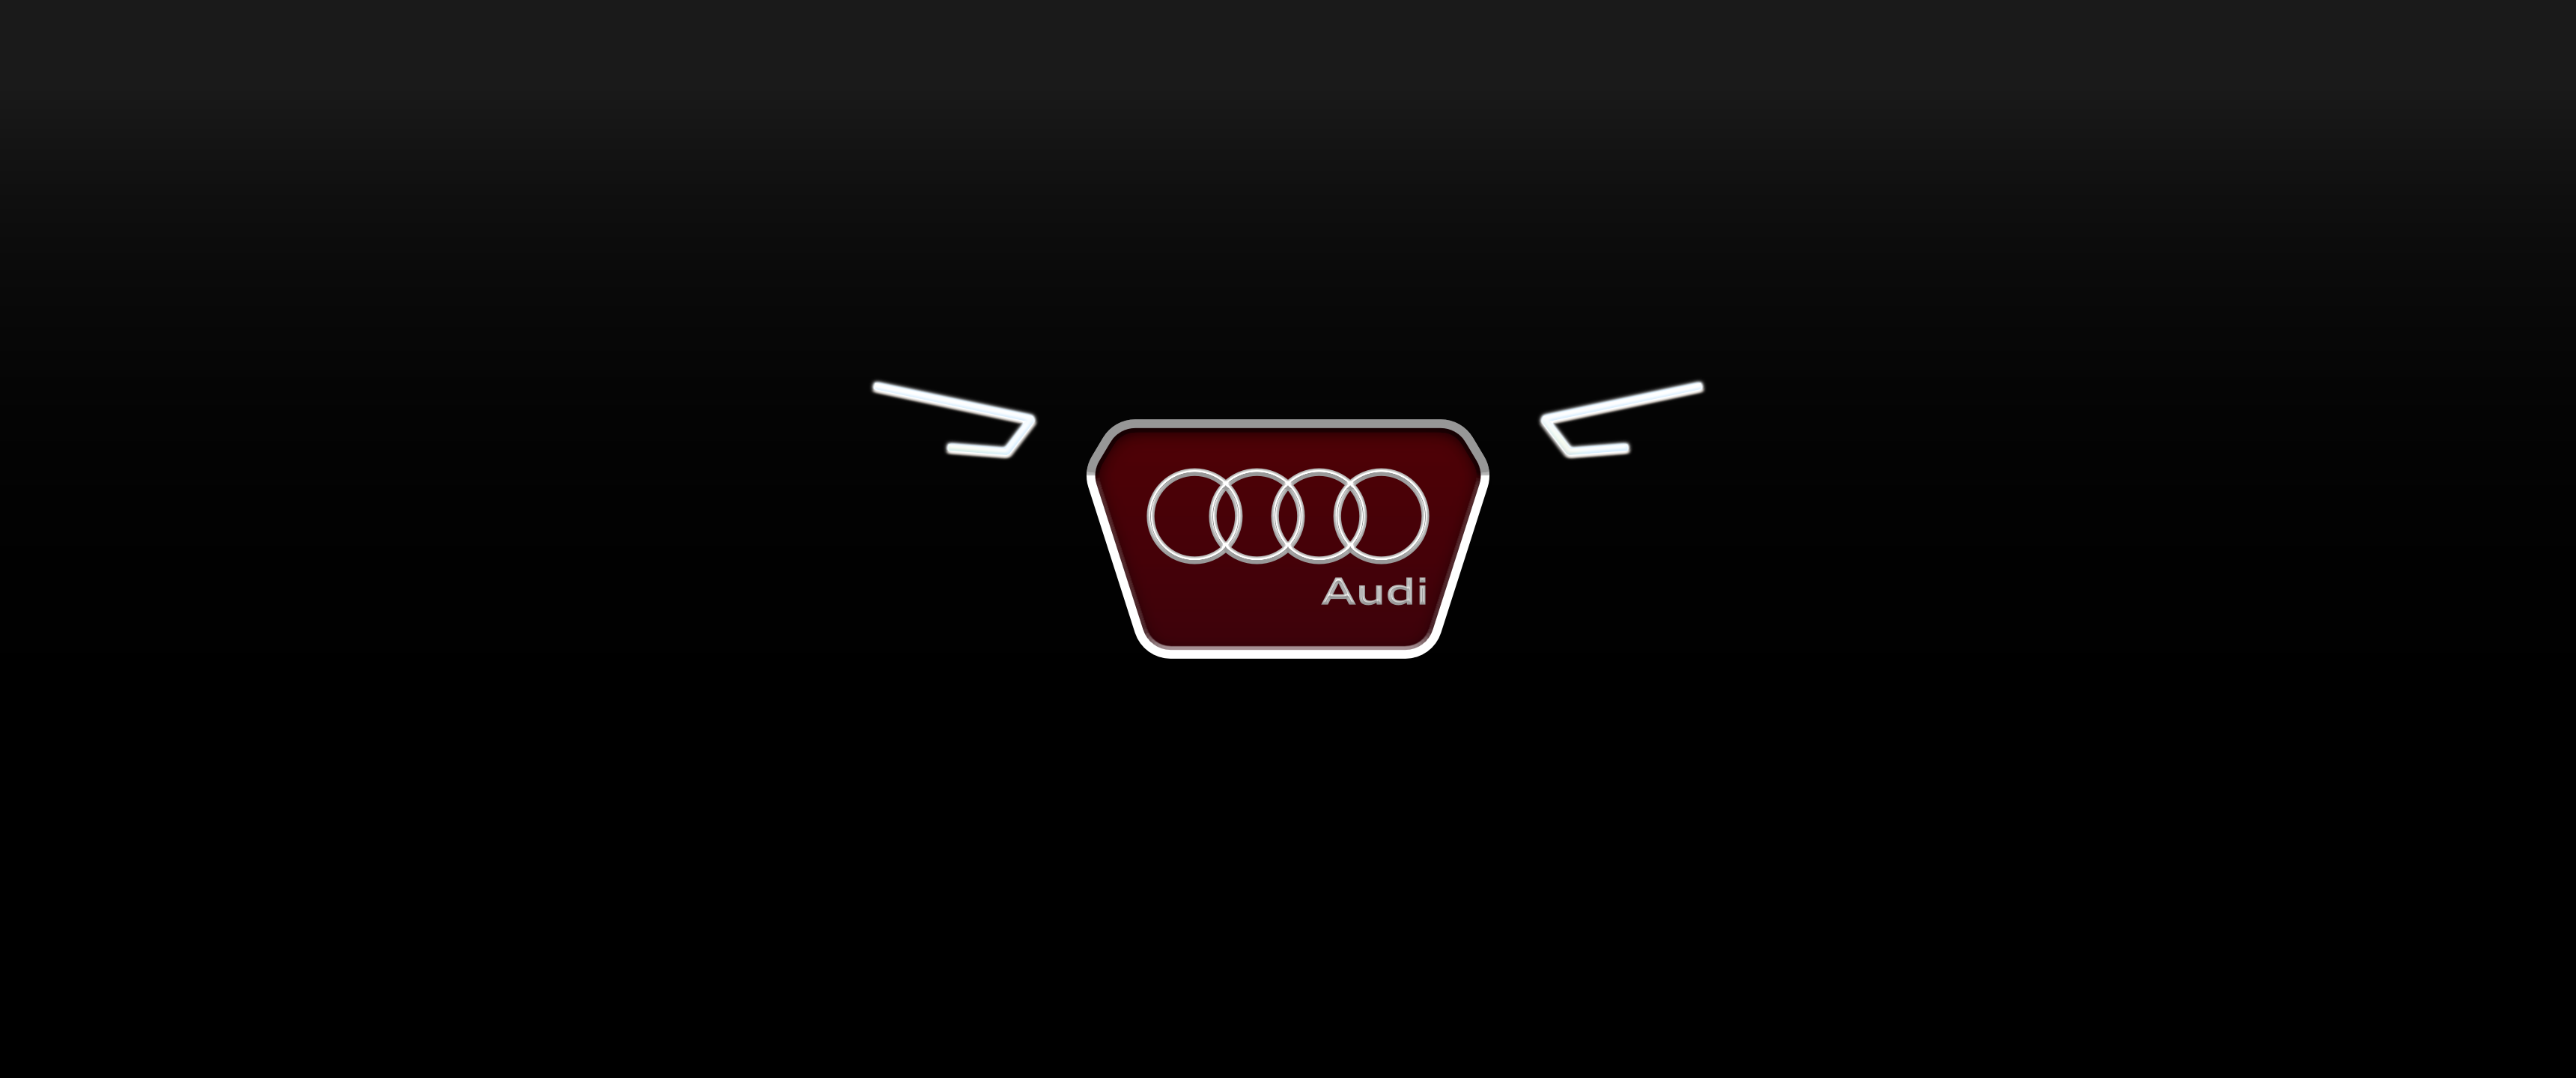 Audi Logo With Headlights Wallpaper Logos HD